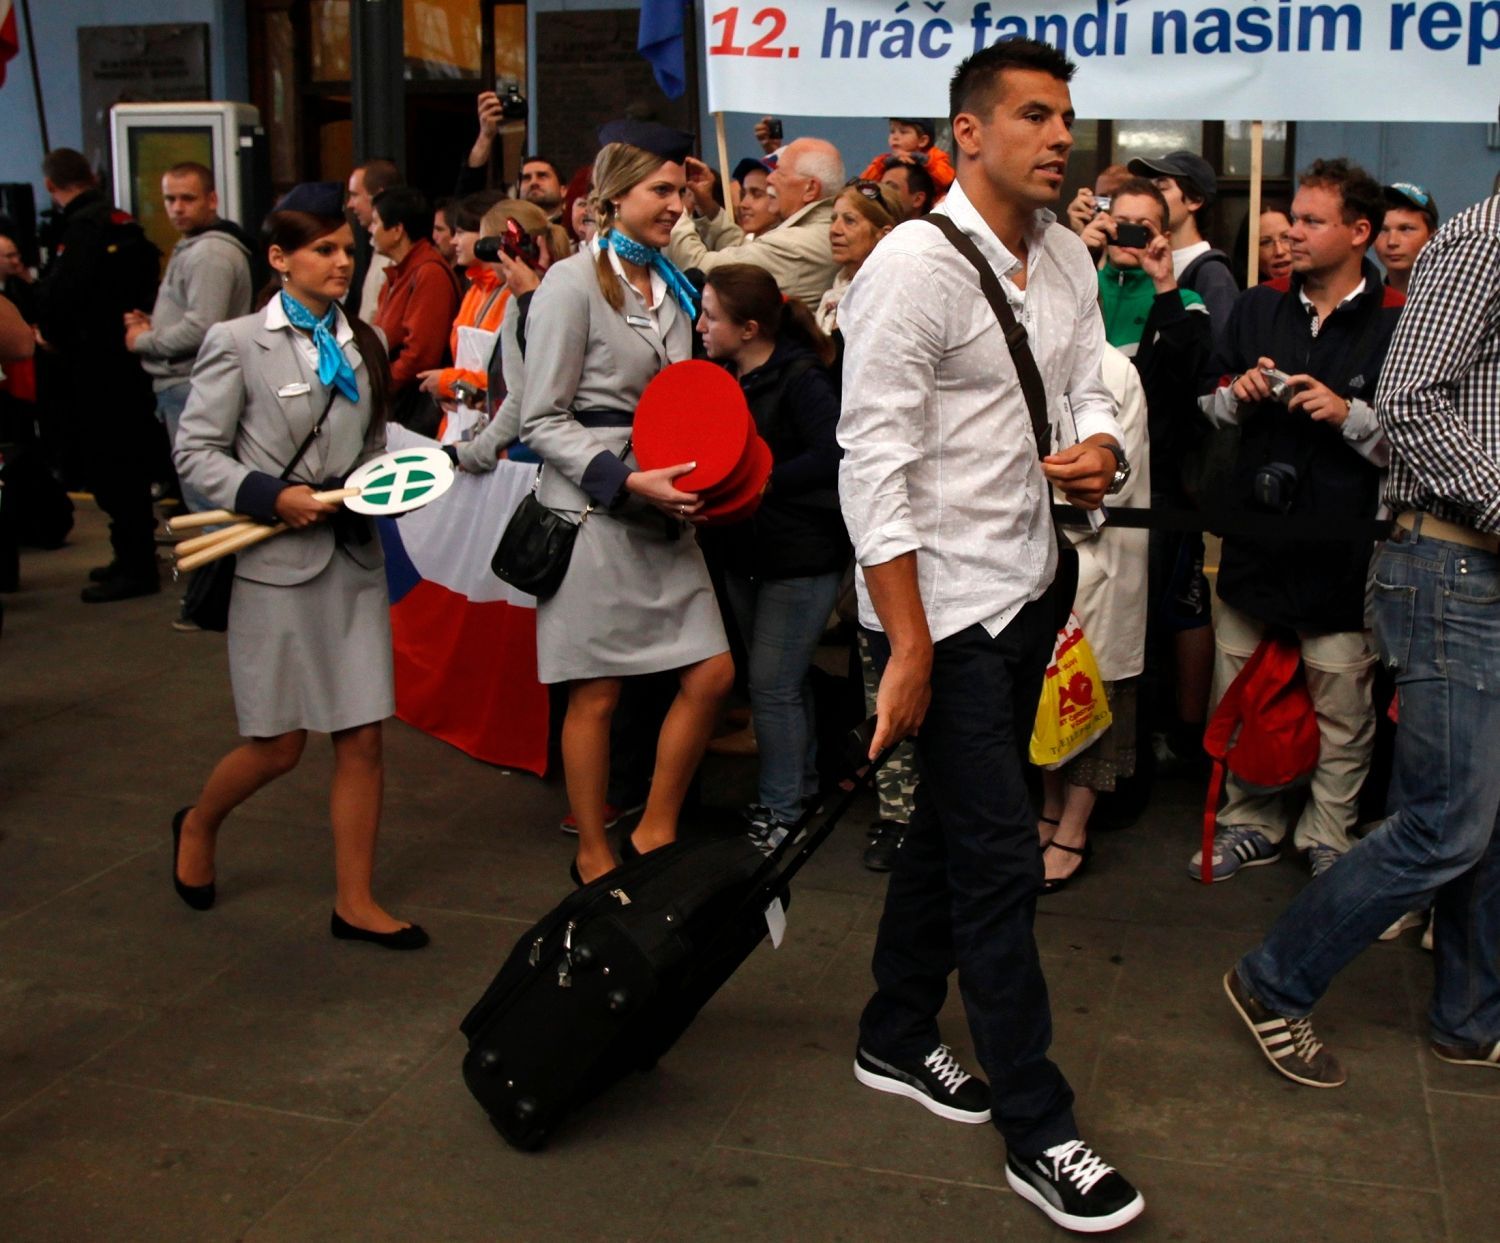 Milan Baroš před odjezdem vlakového speciálu na Euro 2012 v Praze